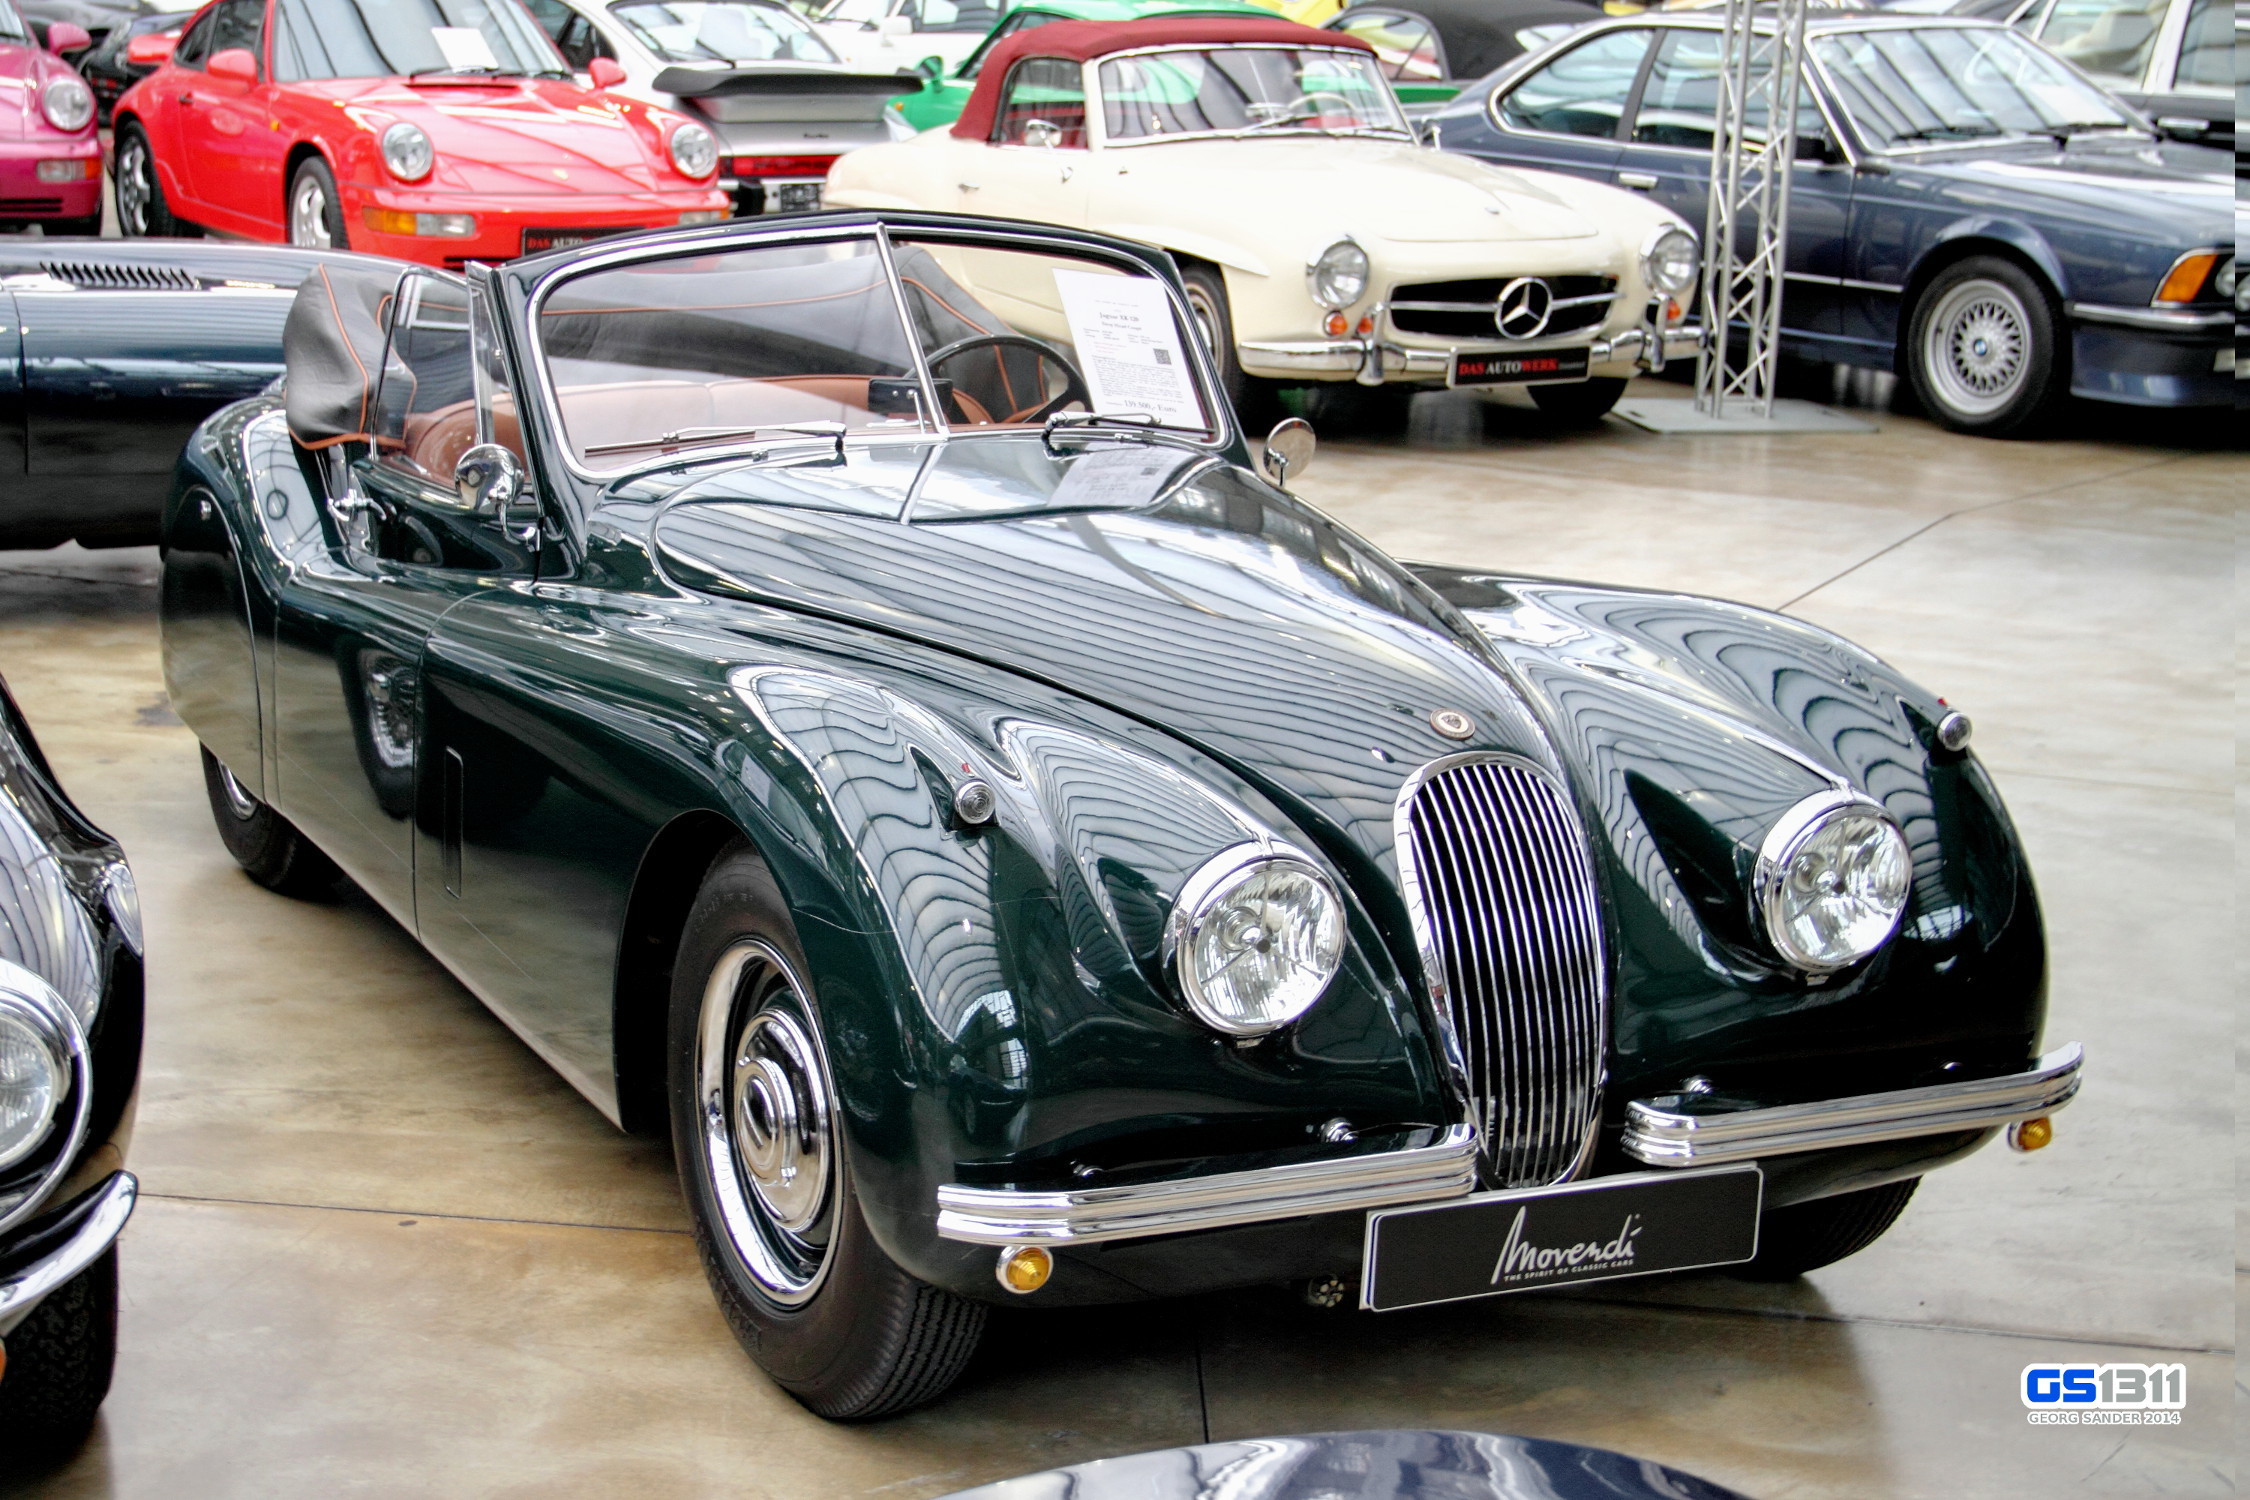 2250x1500 Wallpaper : old, sports car, Vintage car, classic car, coupe, Convertible,  Oldtimer, head, Alt, Seat, Jaguar XK120, open, mark, two, mk, 1954, photo,  drop, ...